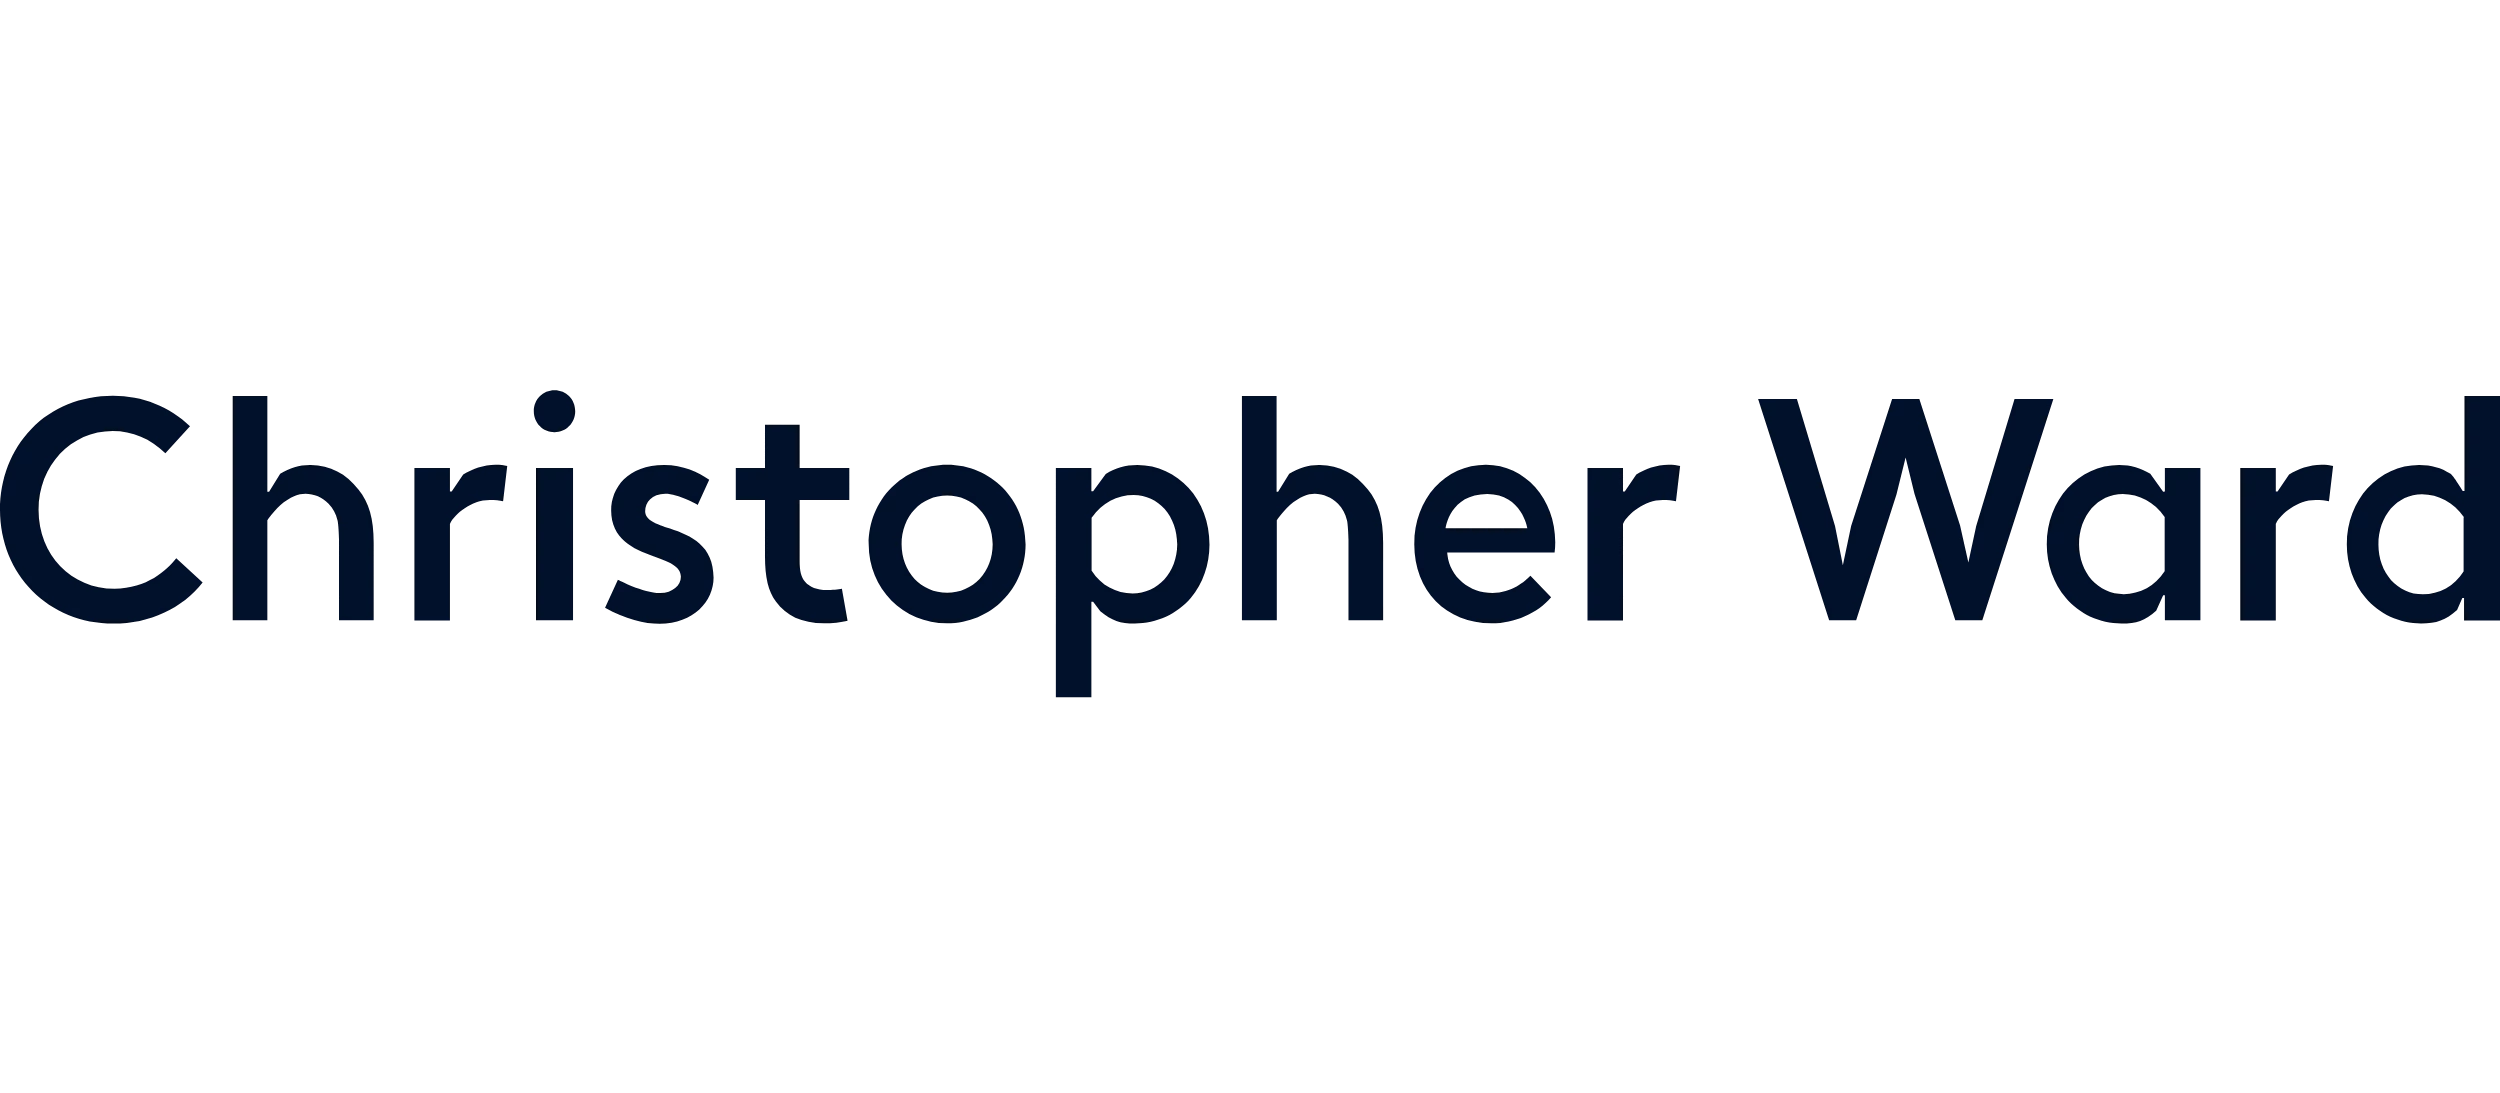 Chistopher Ward logo